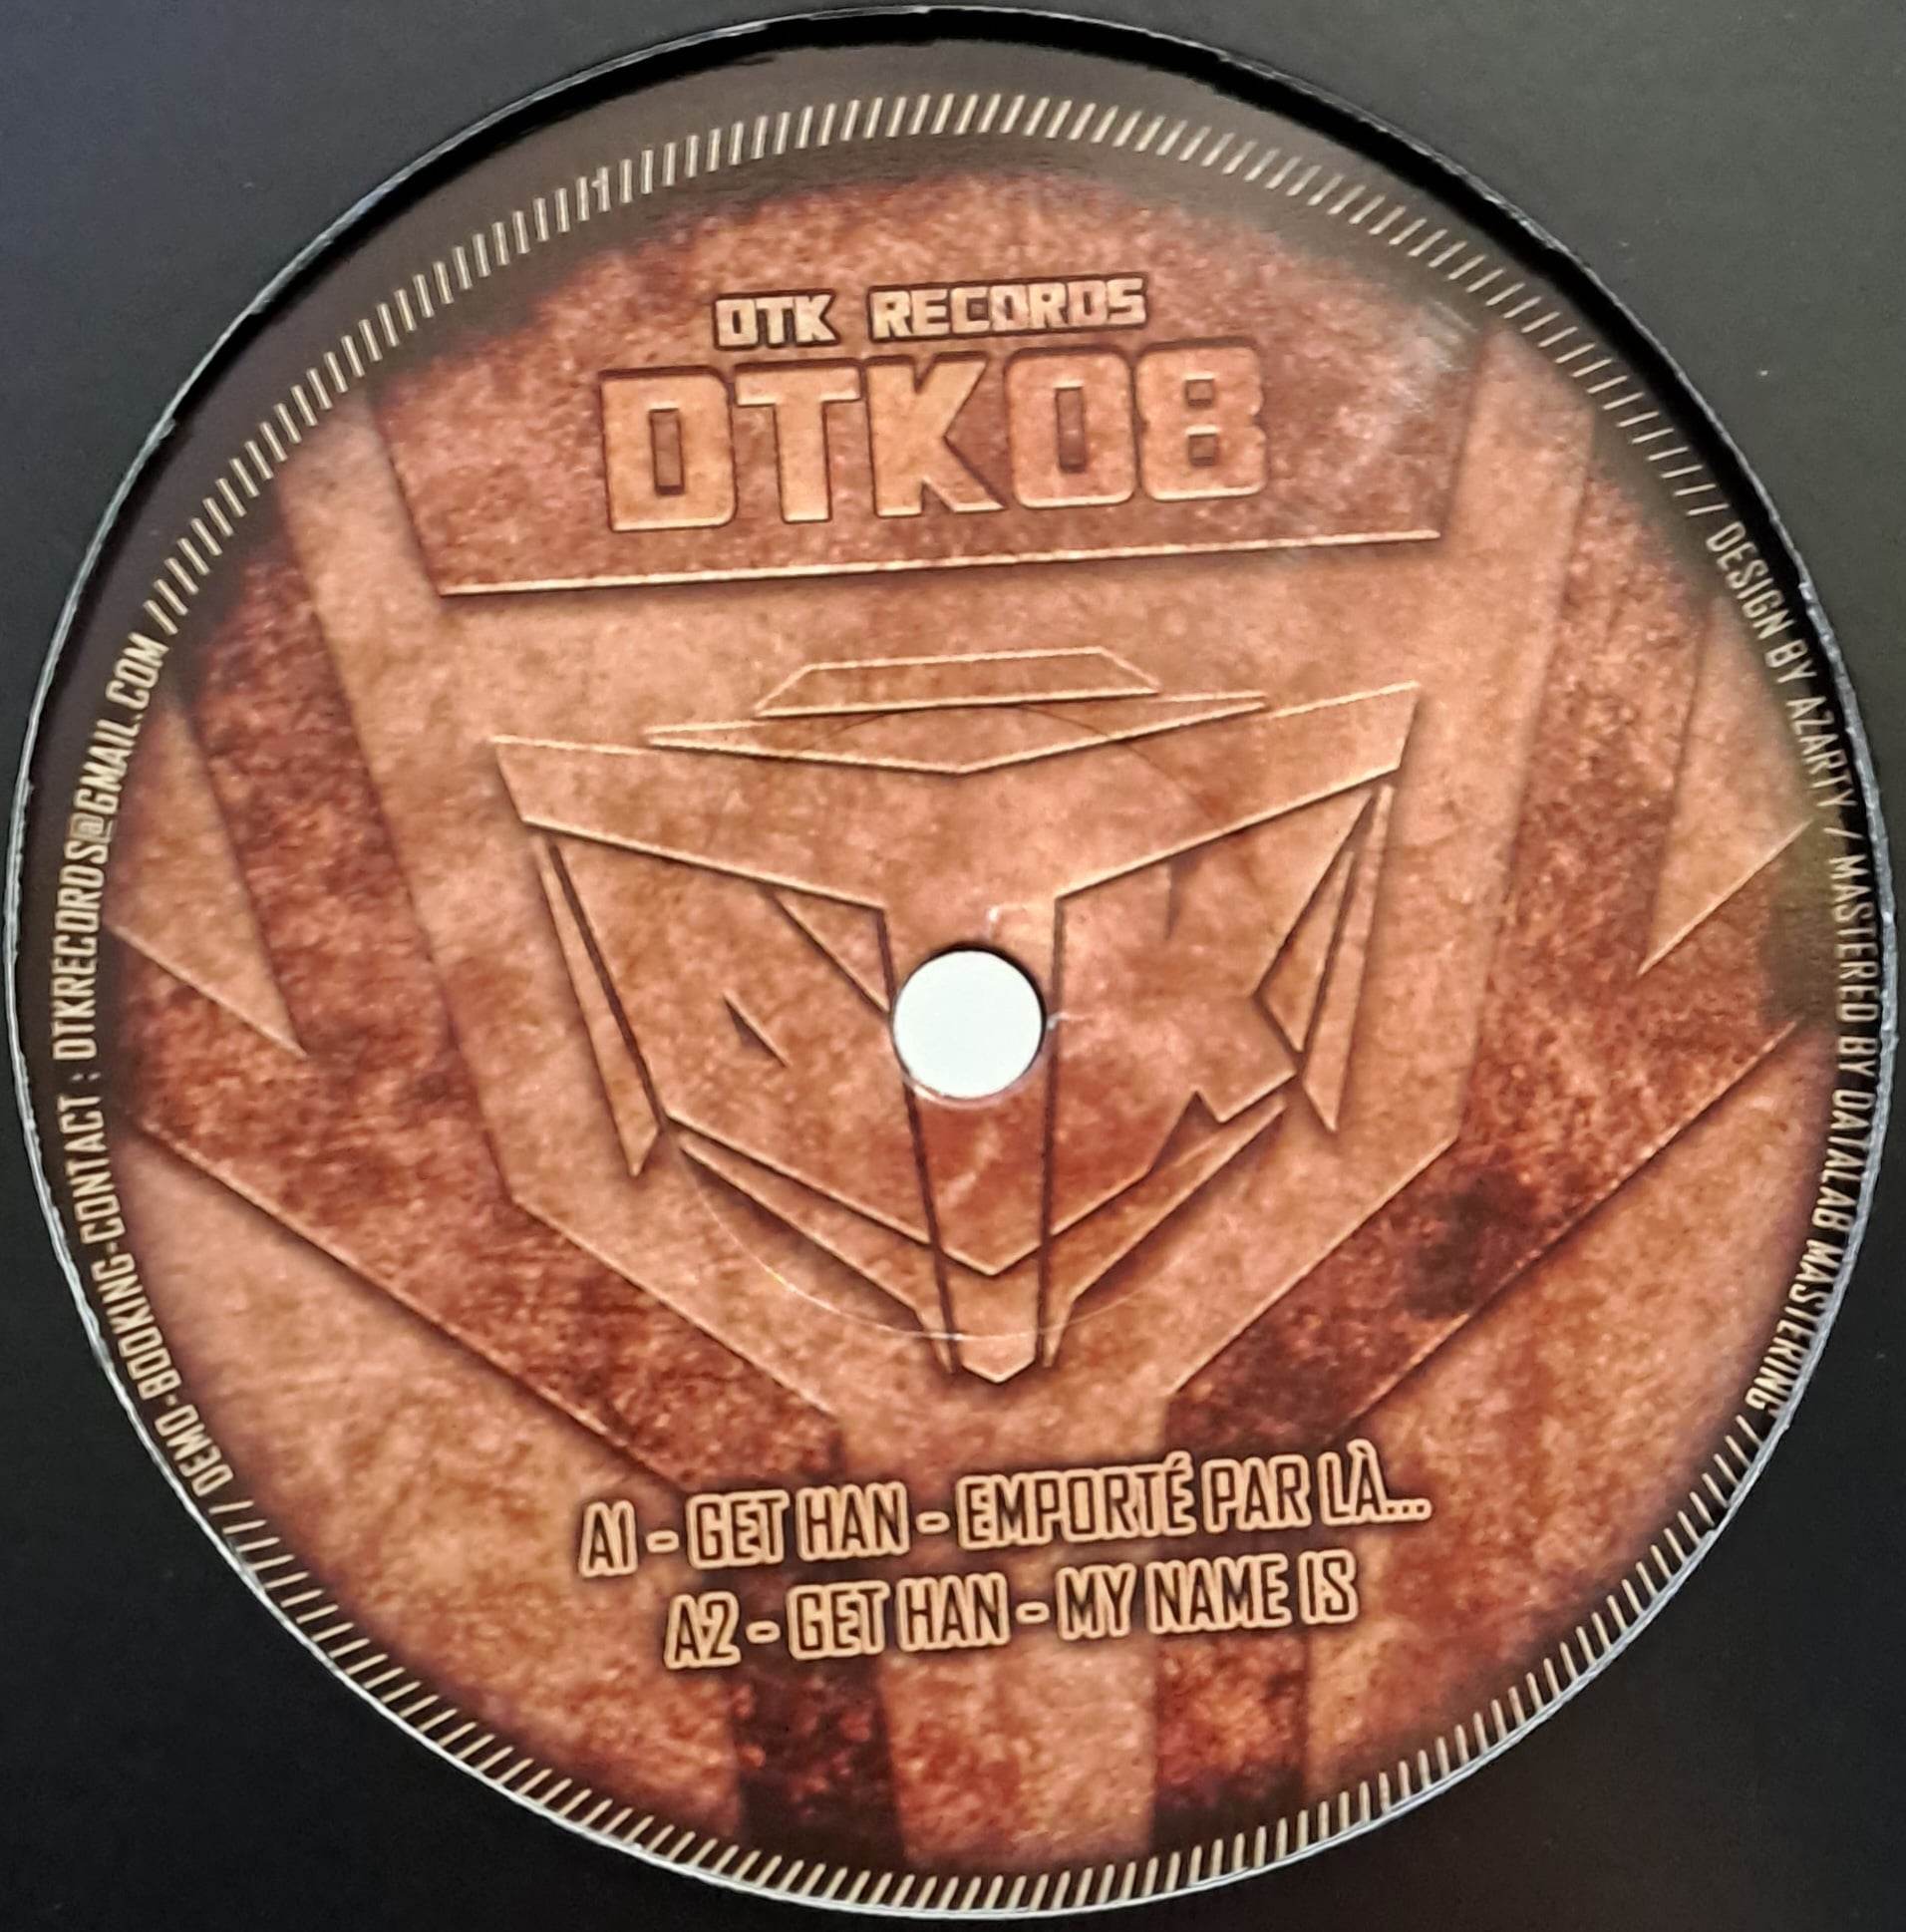 Dtraké 08 - vinyle hardcore